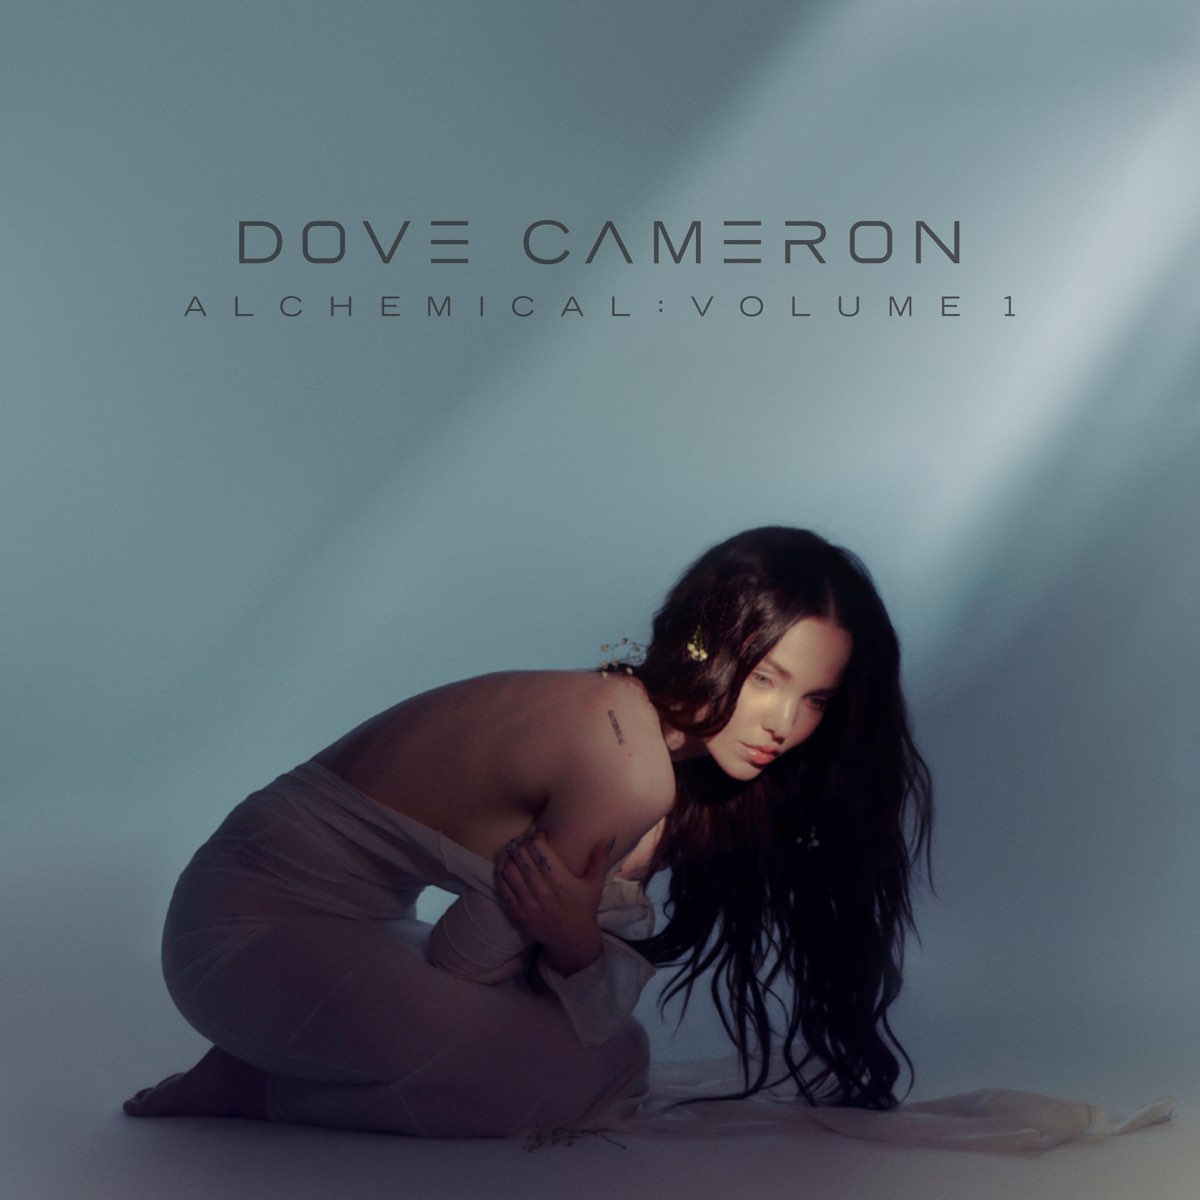 Musical artist Dove Camerons official album cover, Alchemical: Volume 1. PUBLIC DOMAIN